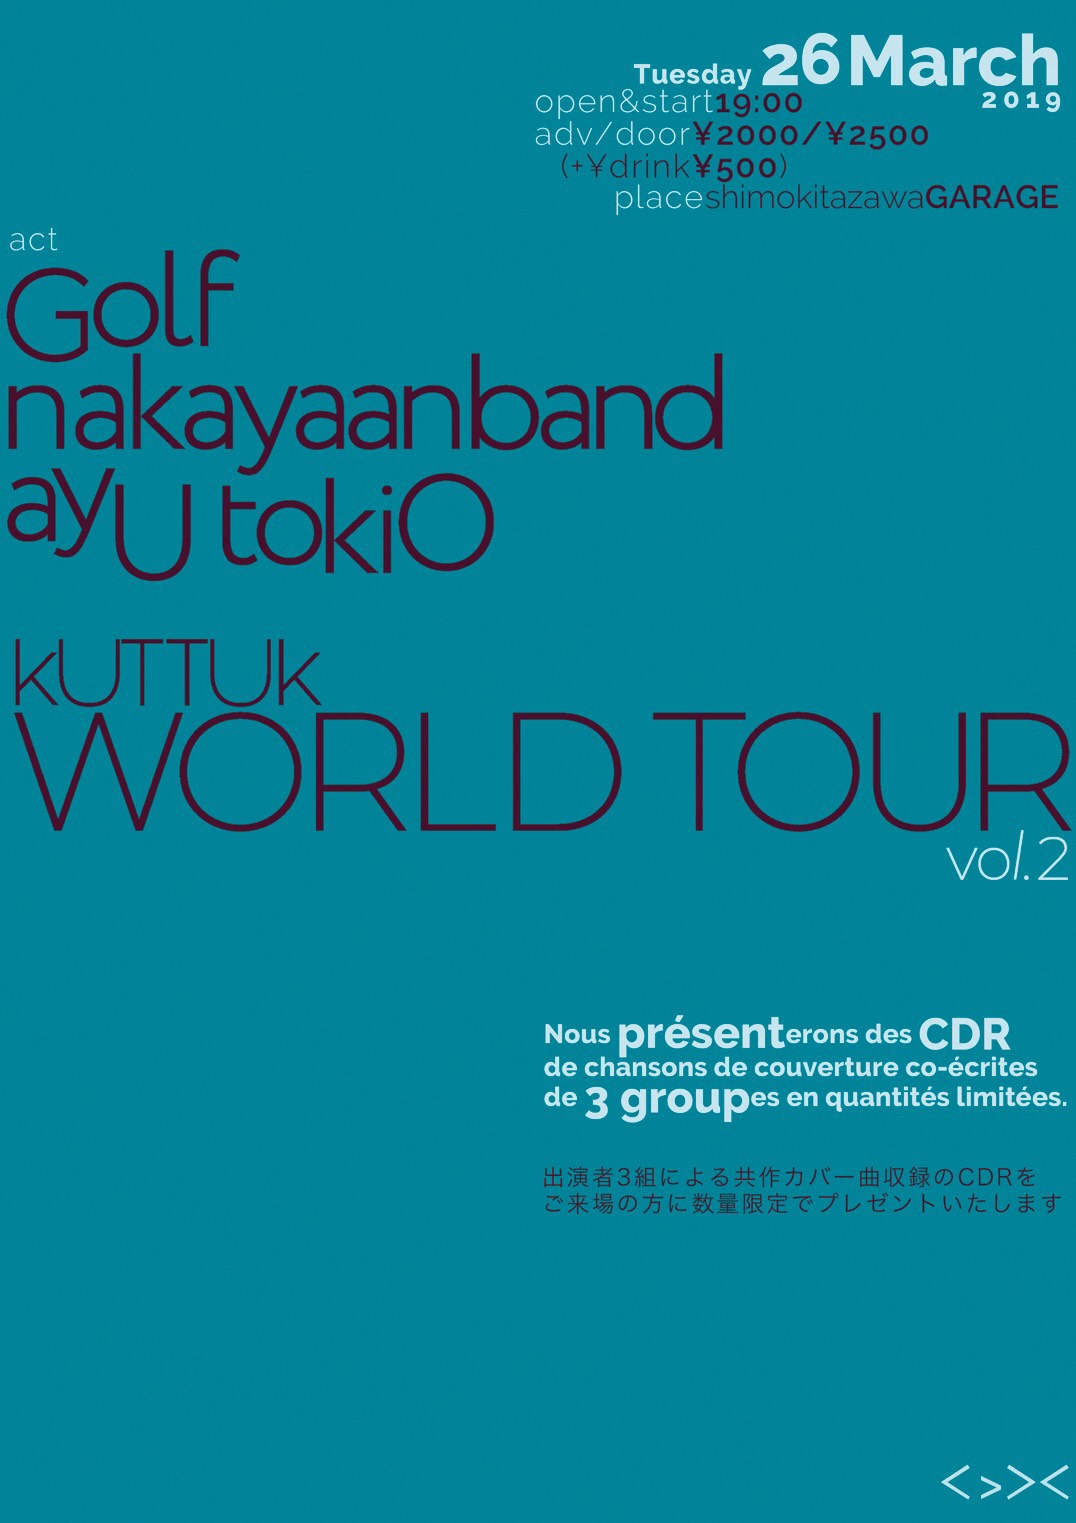 KUTTUK WORLD TOUR vol.2